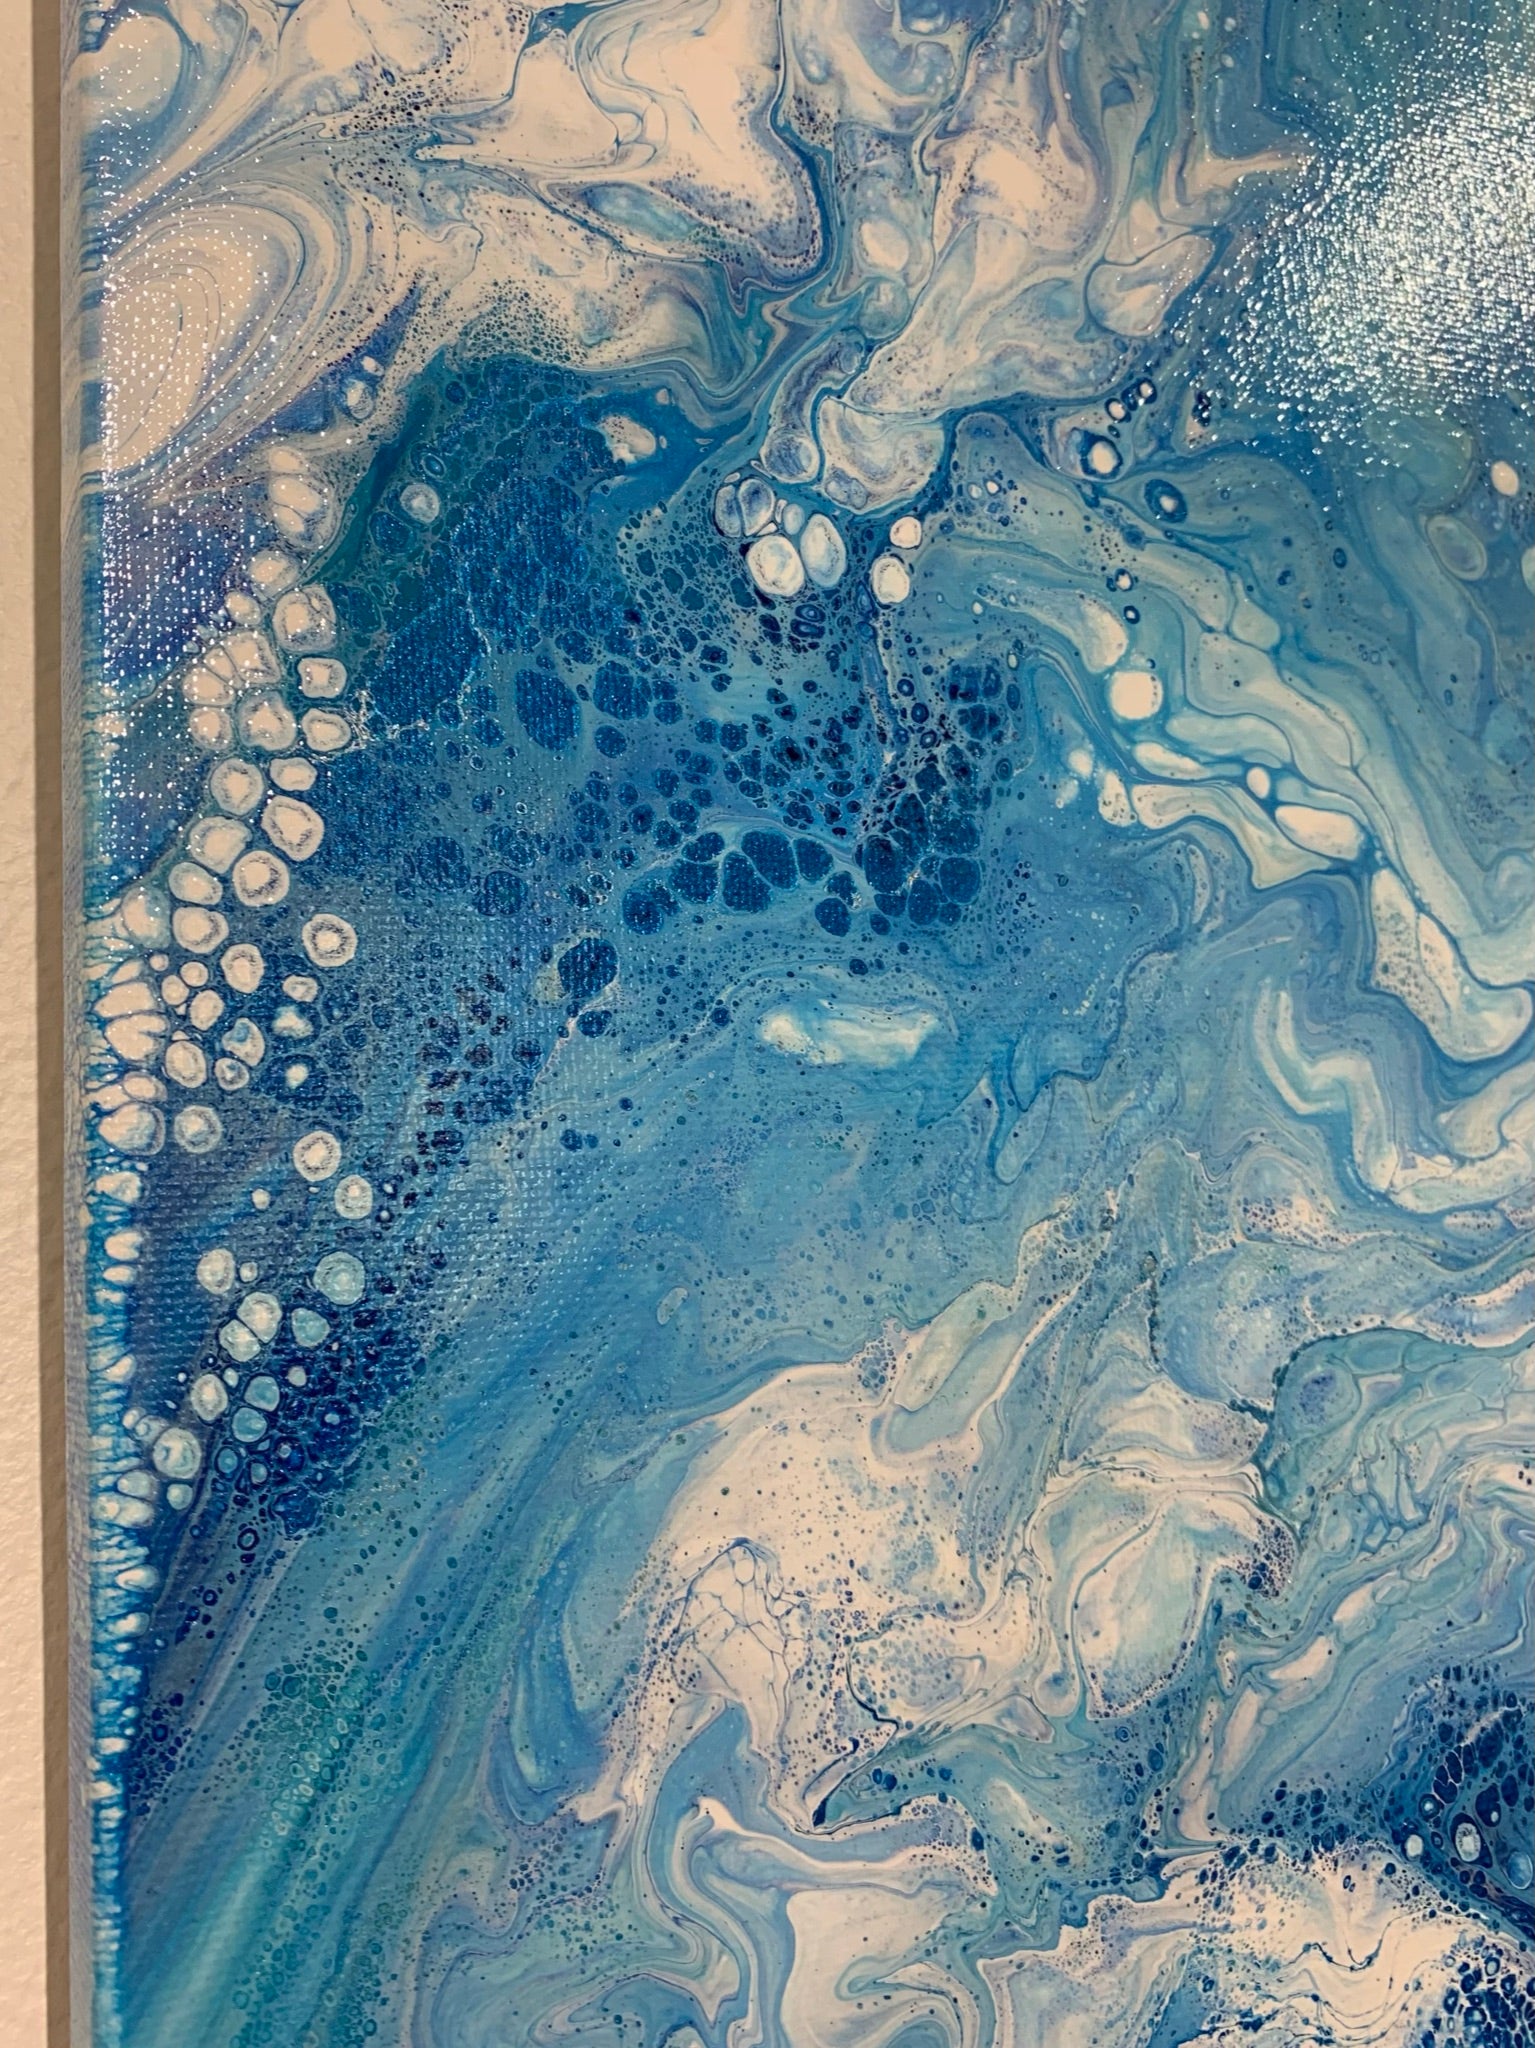 Artwork - Water Flows - 12x24